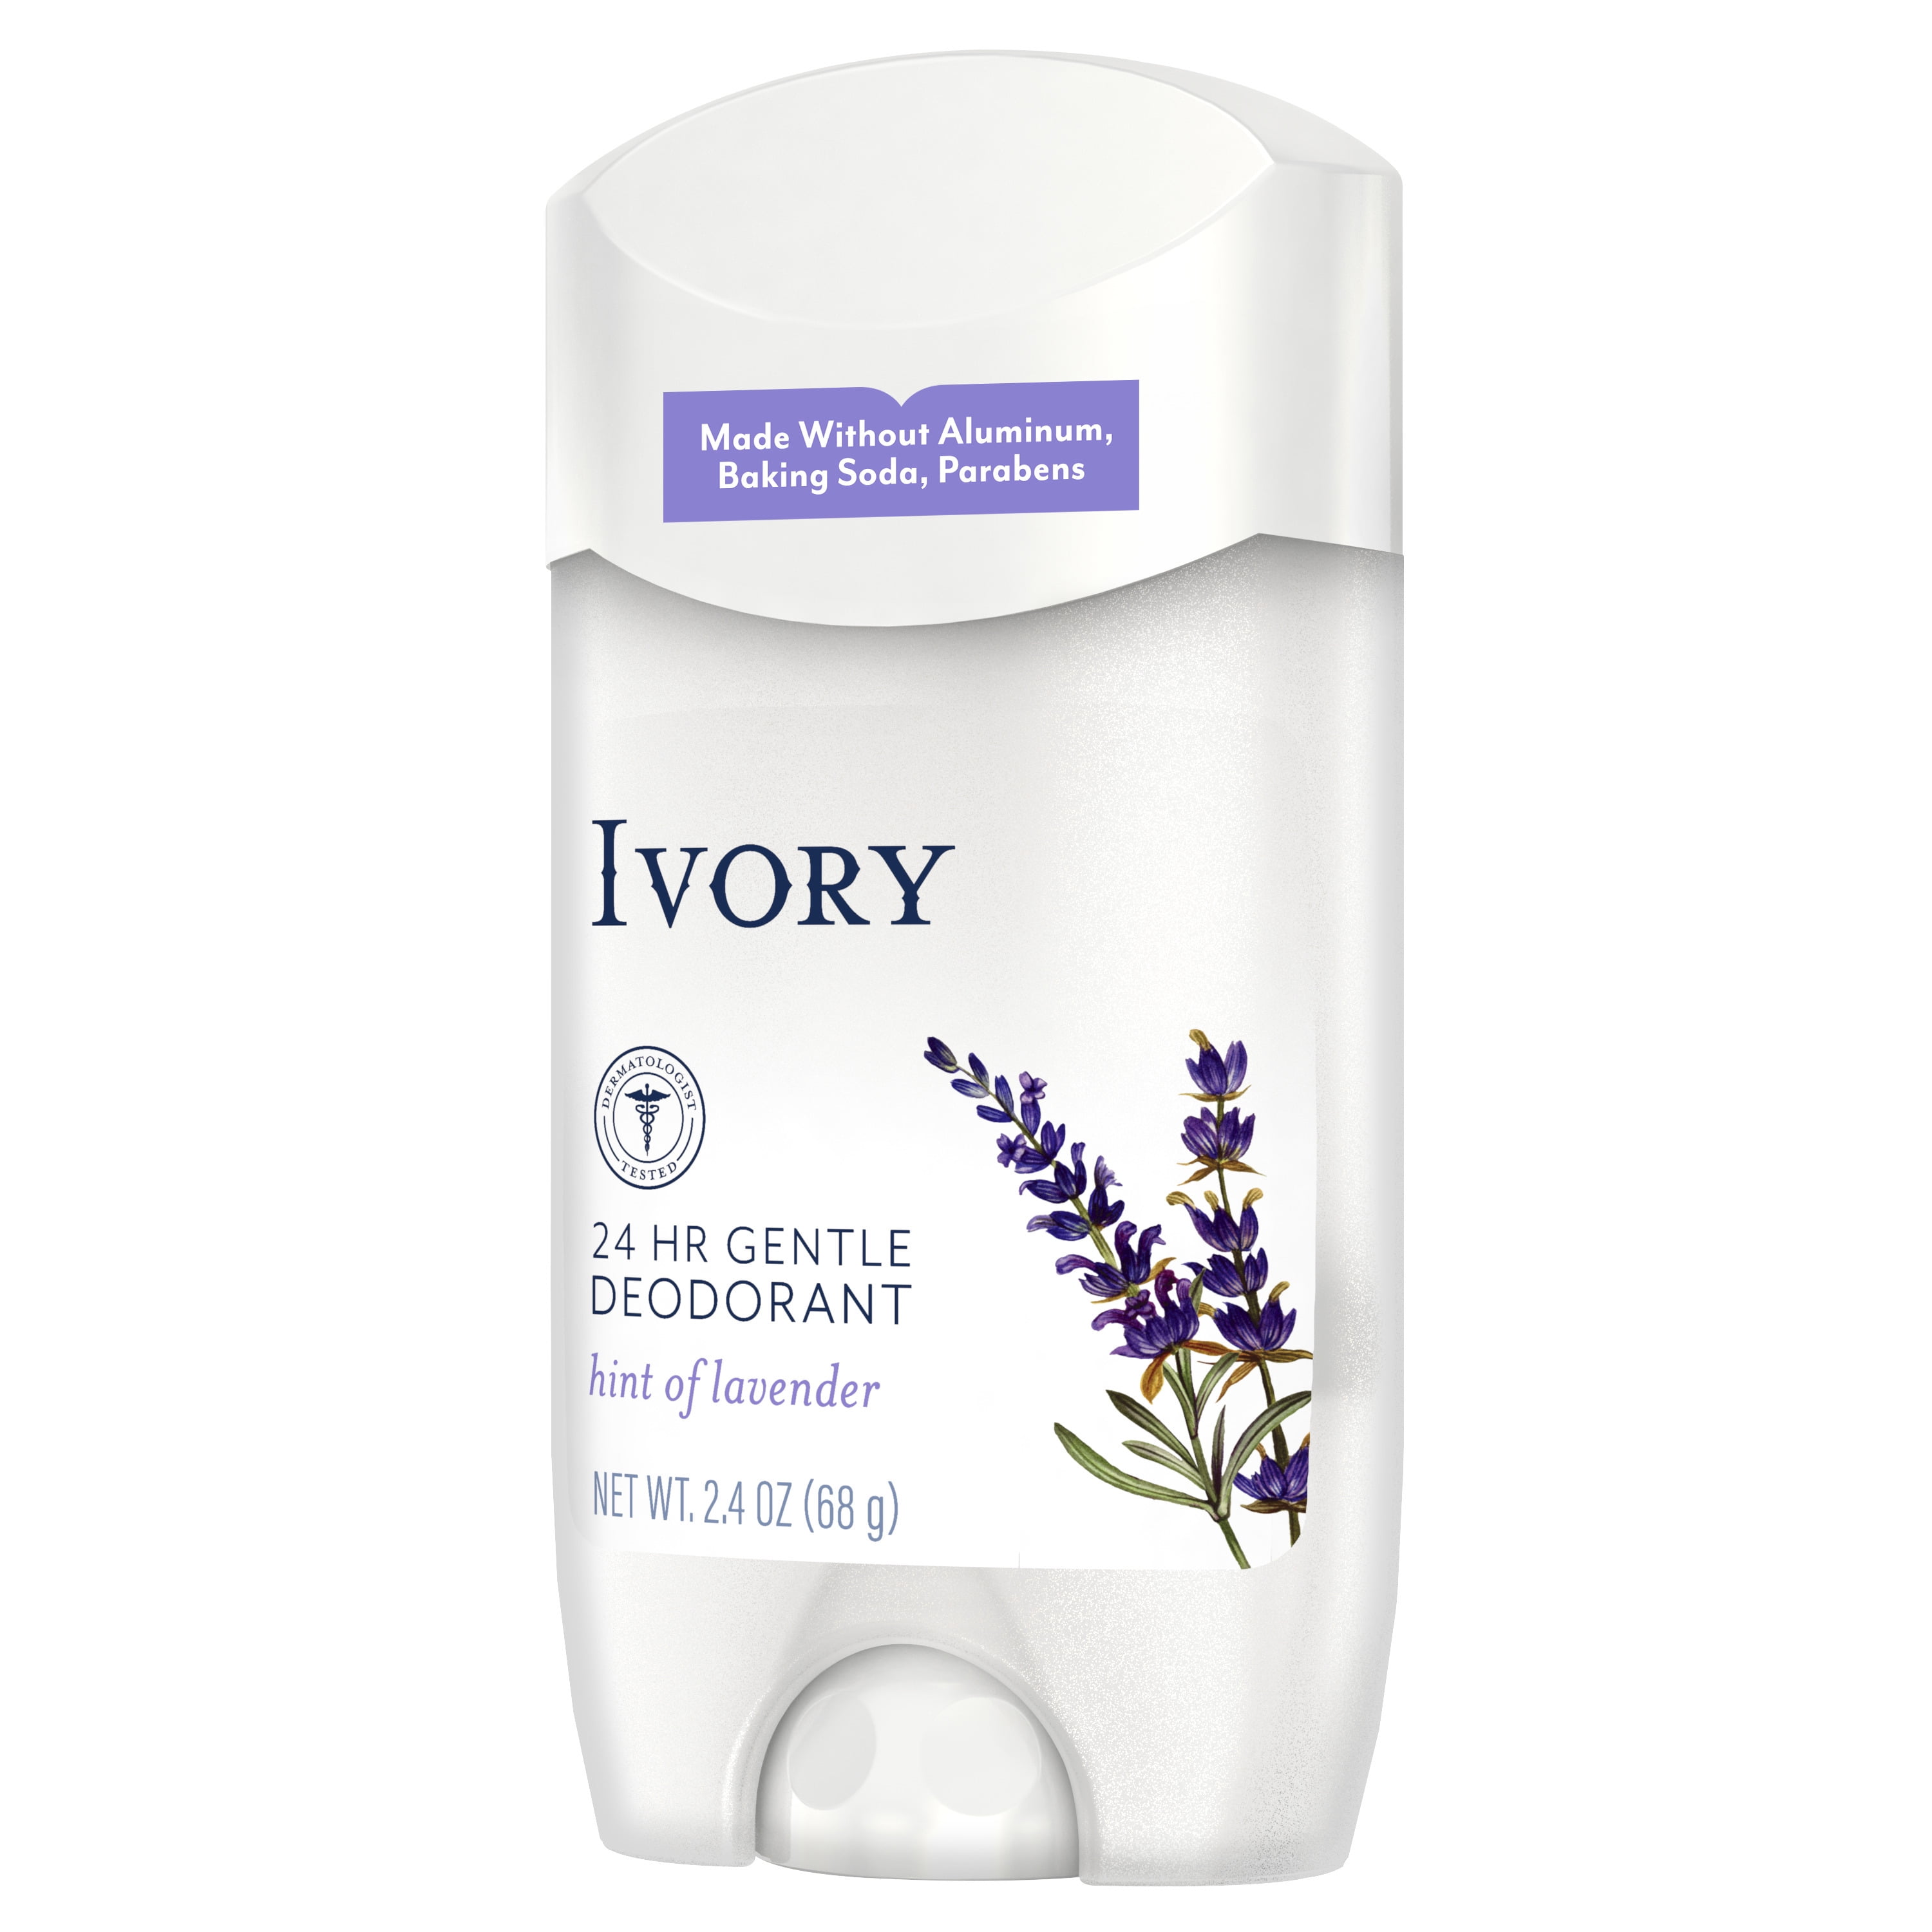 Ivory Gentle Deodorant, of Lavender, 2.4oz -